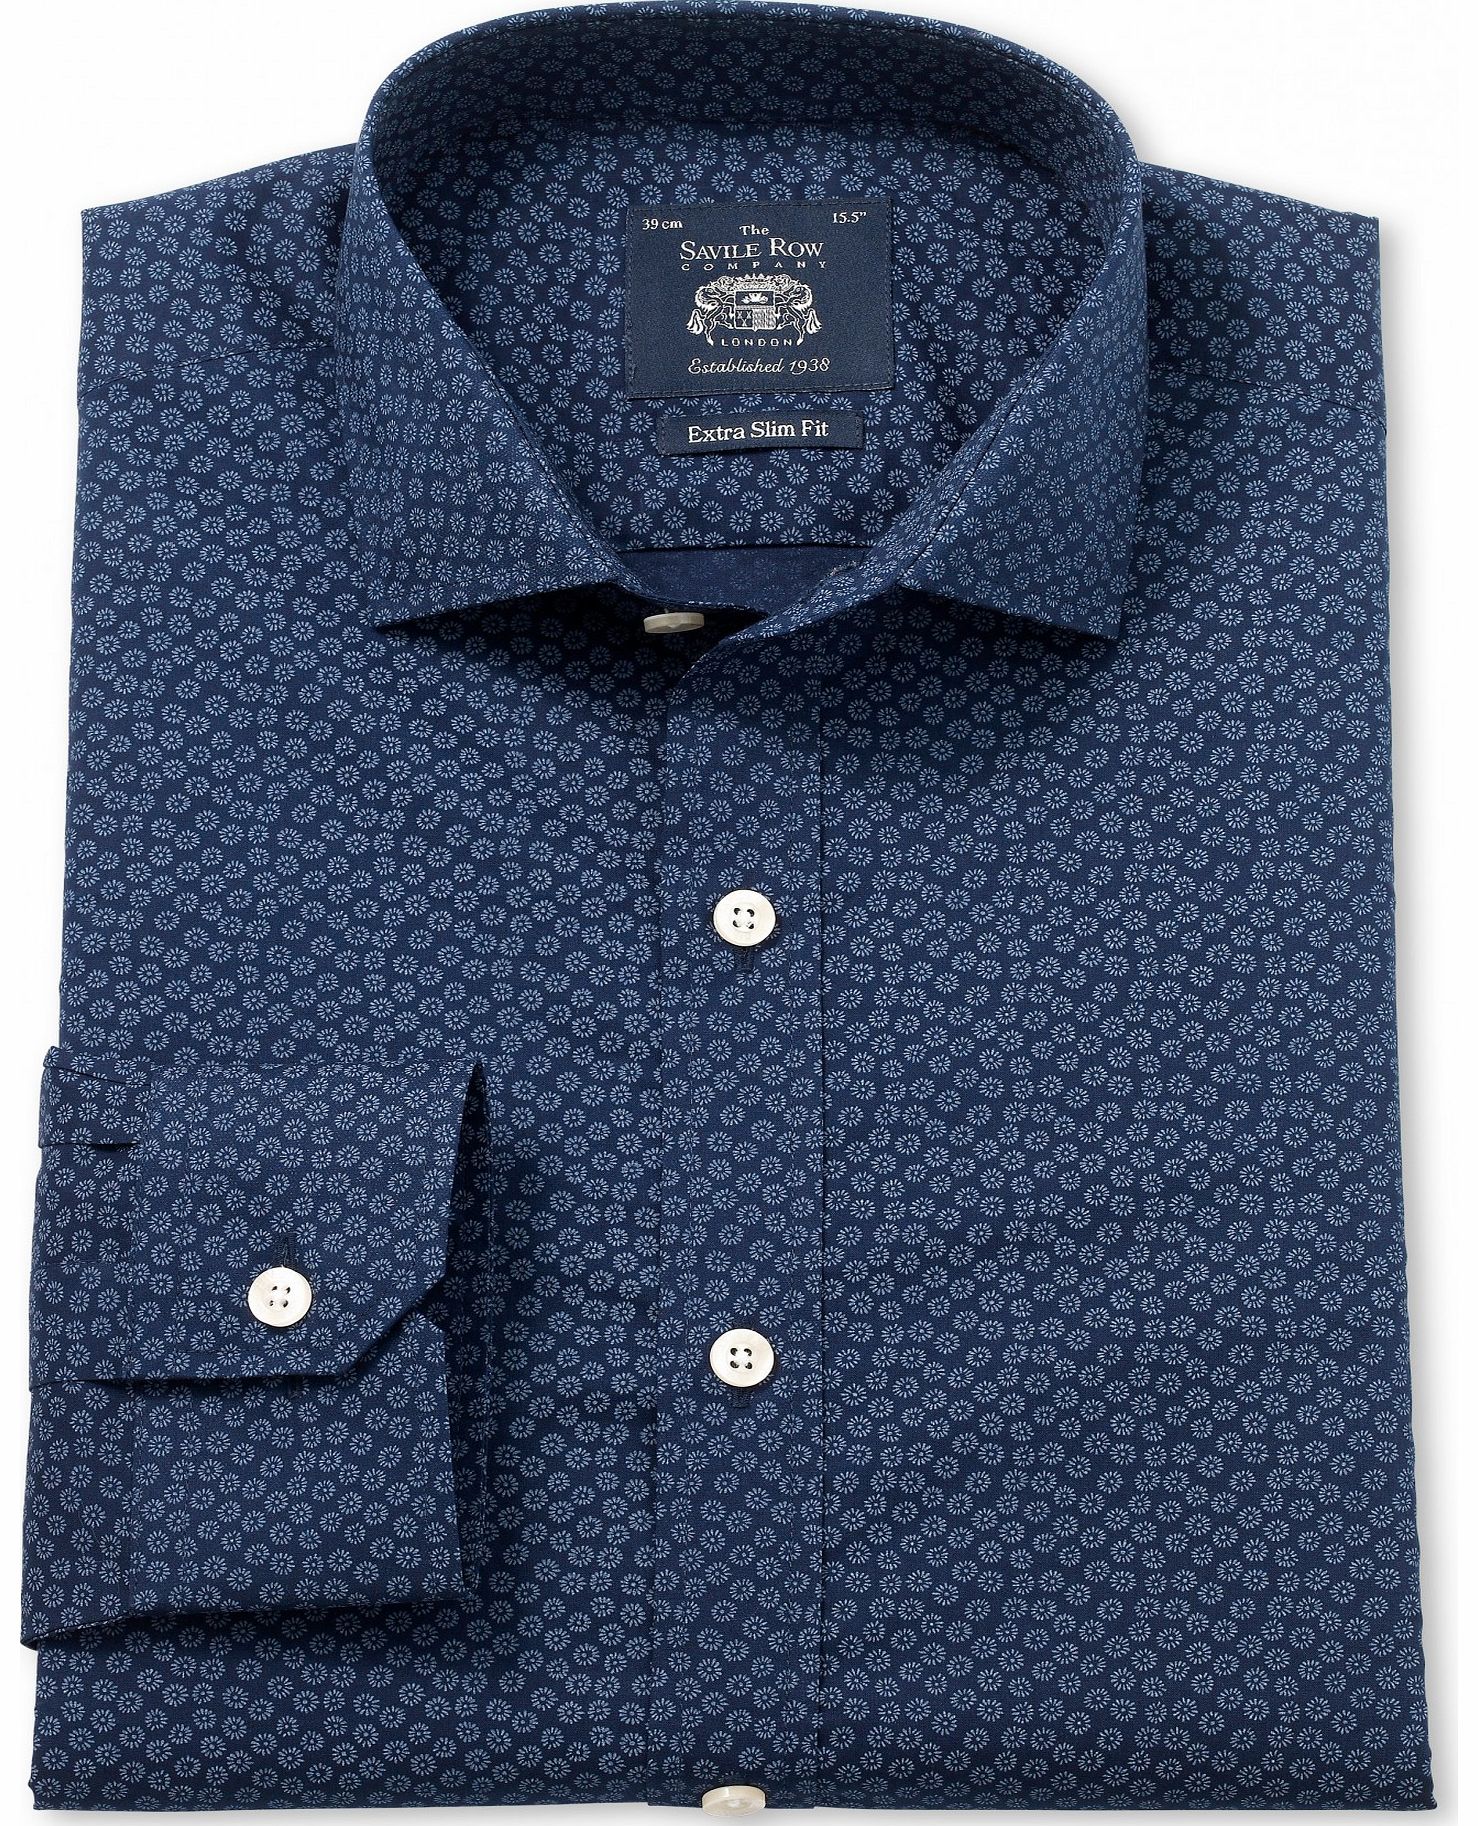 Savile Row Company Navy Blue Printed Extra Slim Fit Shirt 16 1/2``